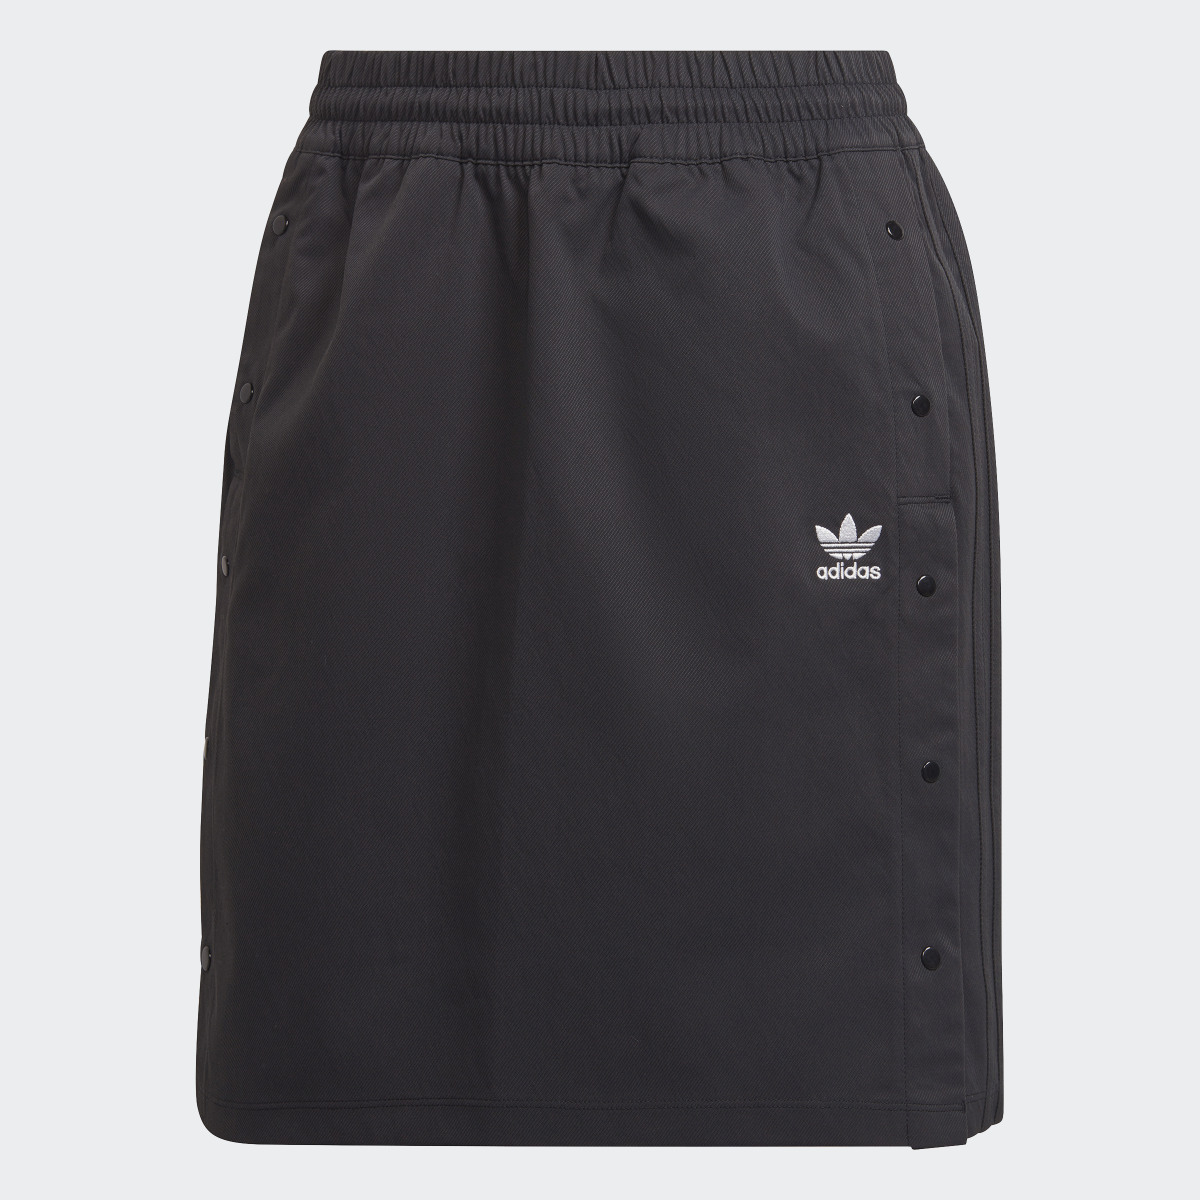 Adidas Always Original Snap-Button Skirt. 10